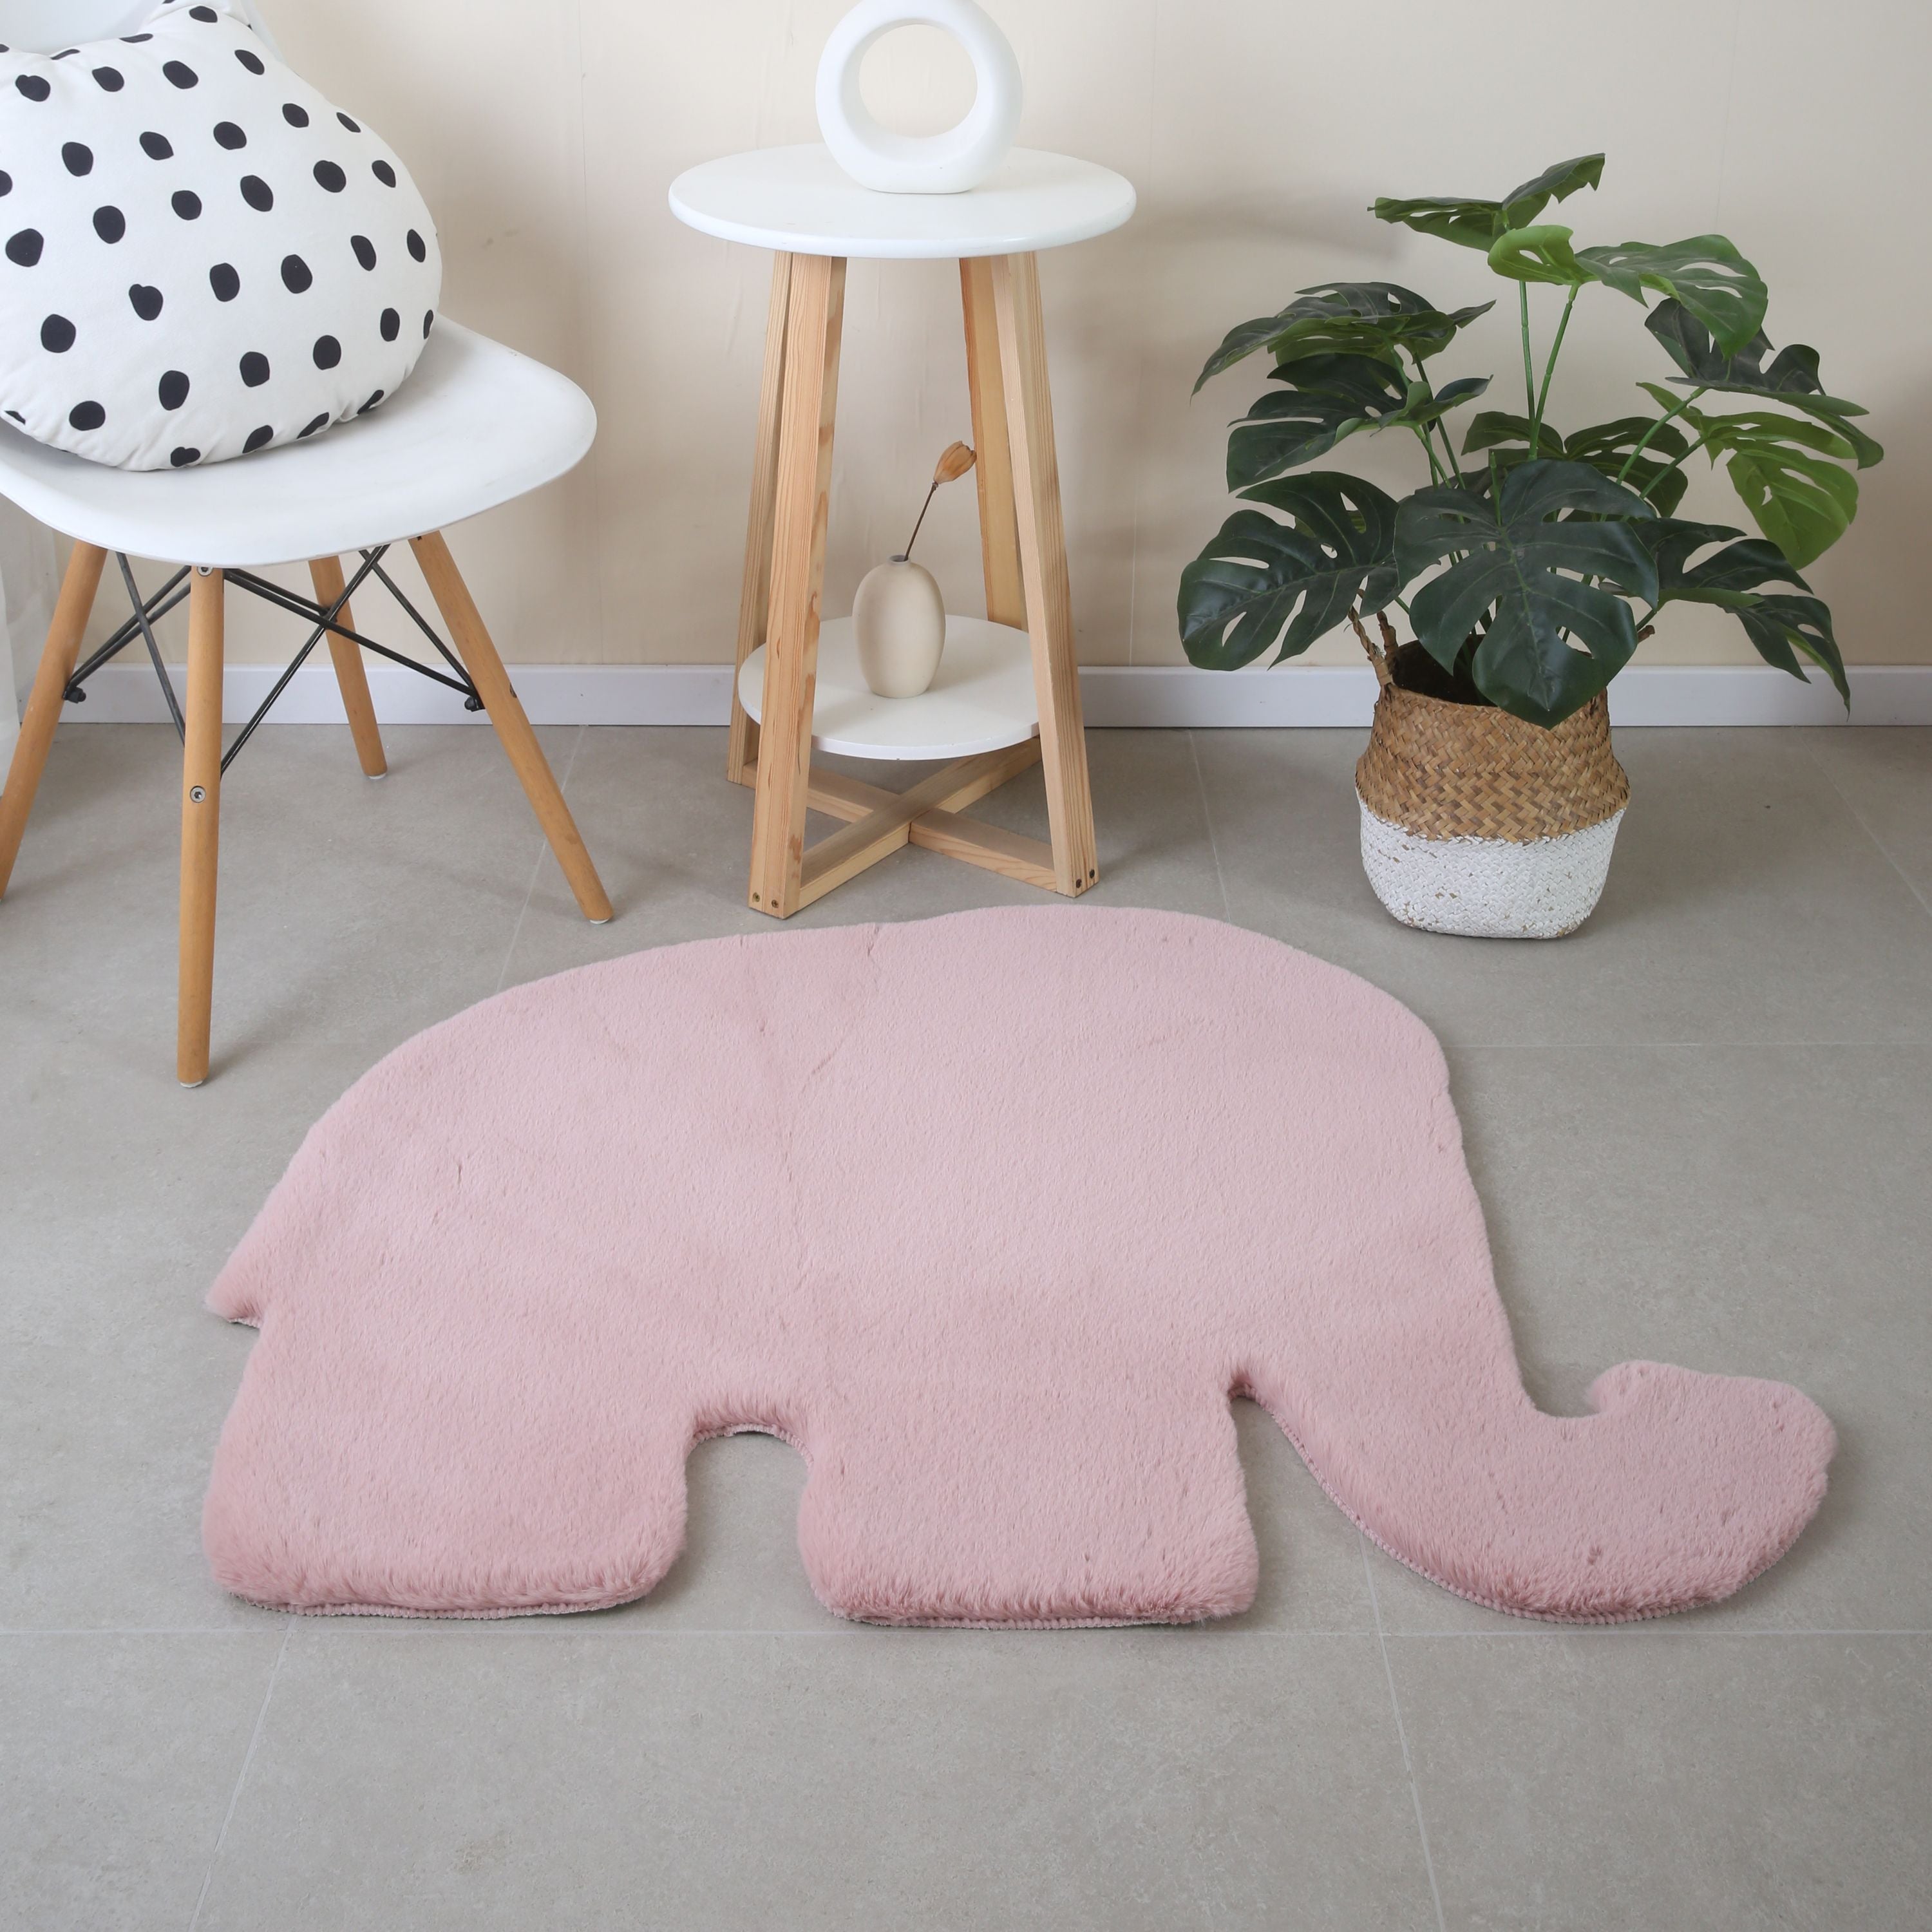 Teppich Plüsch Einfarbig Elefantenform Kunstfell Kinderzimmer Super Felloptik